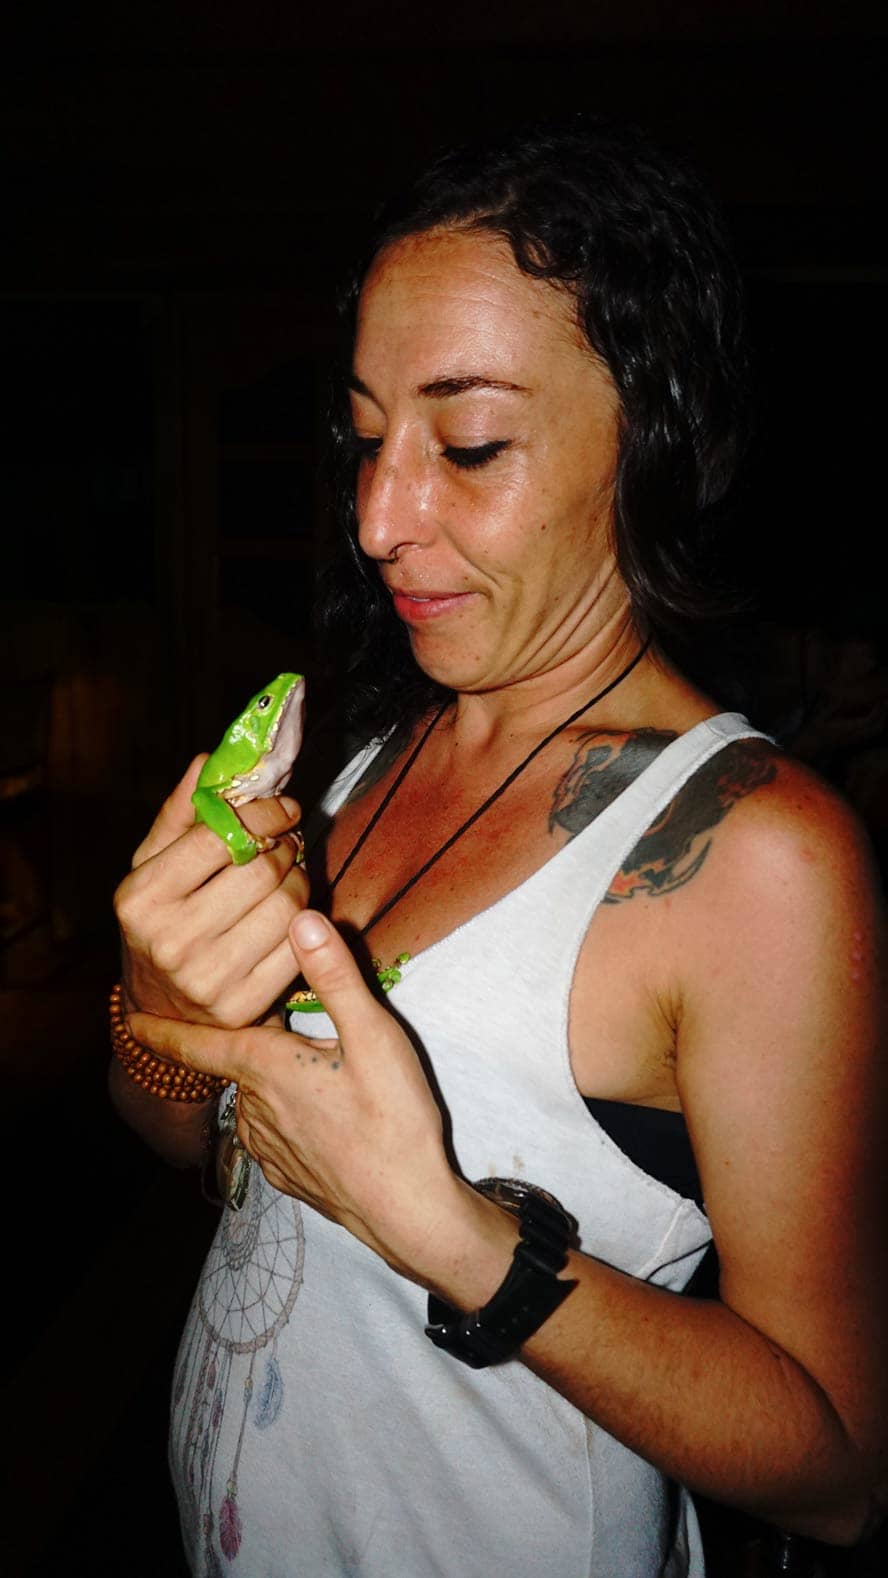 kambo frog and cristina muñoz